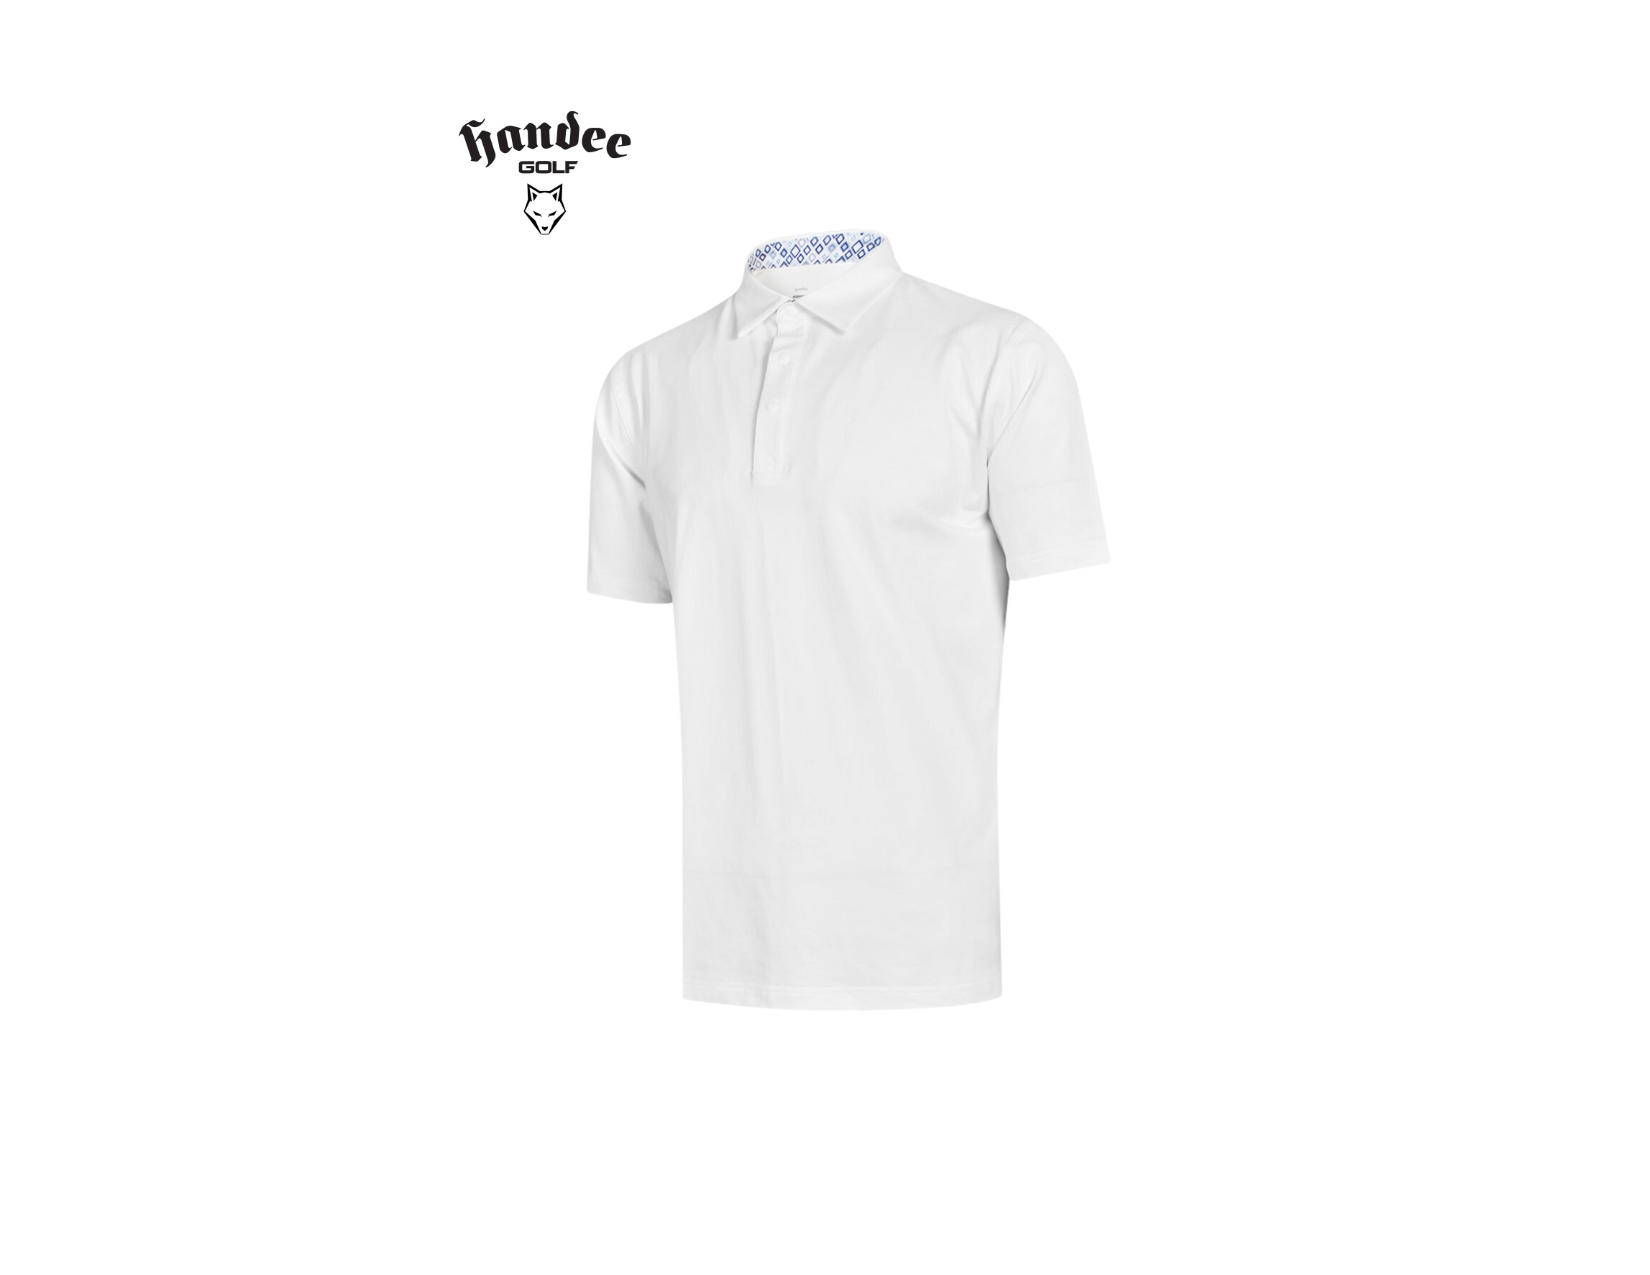 Golf shirts – Handee Golf